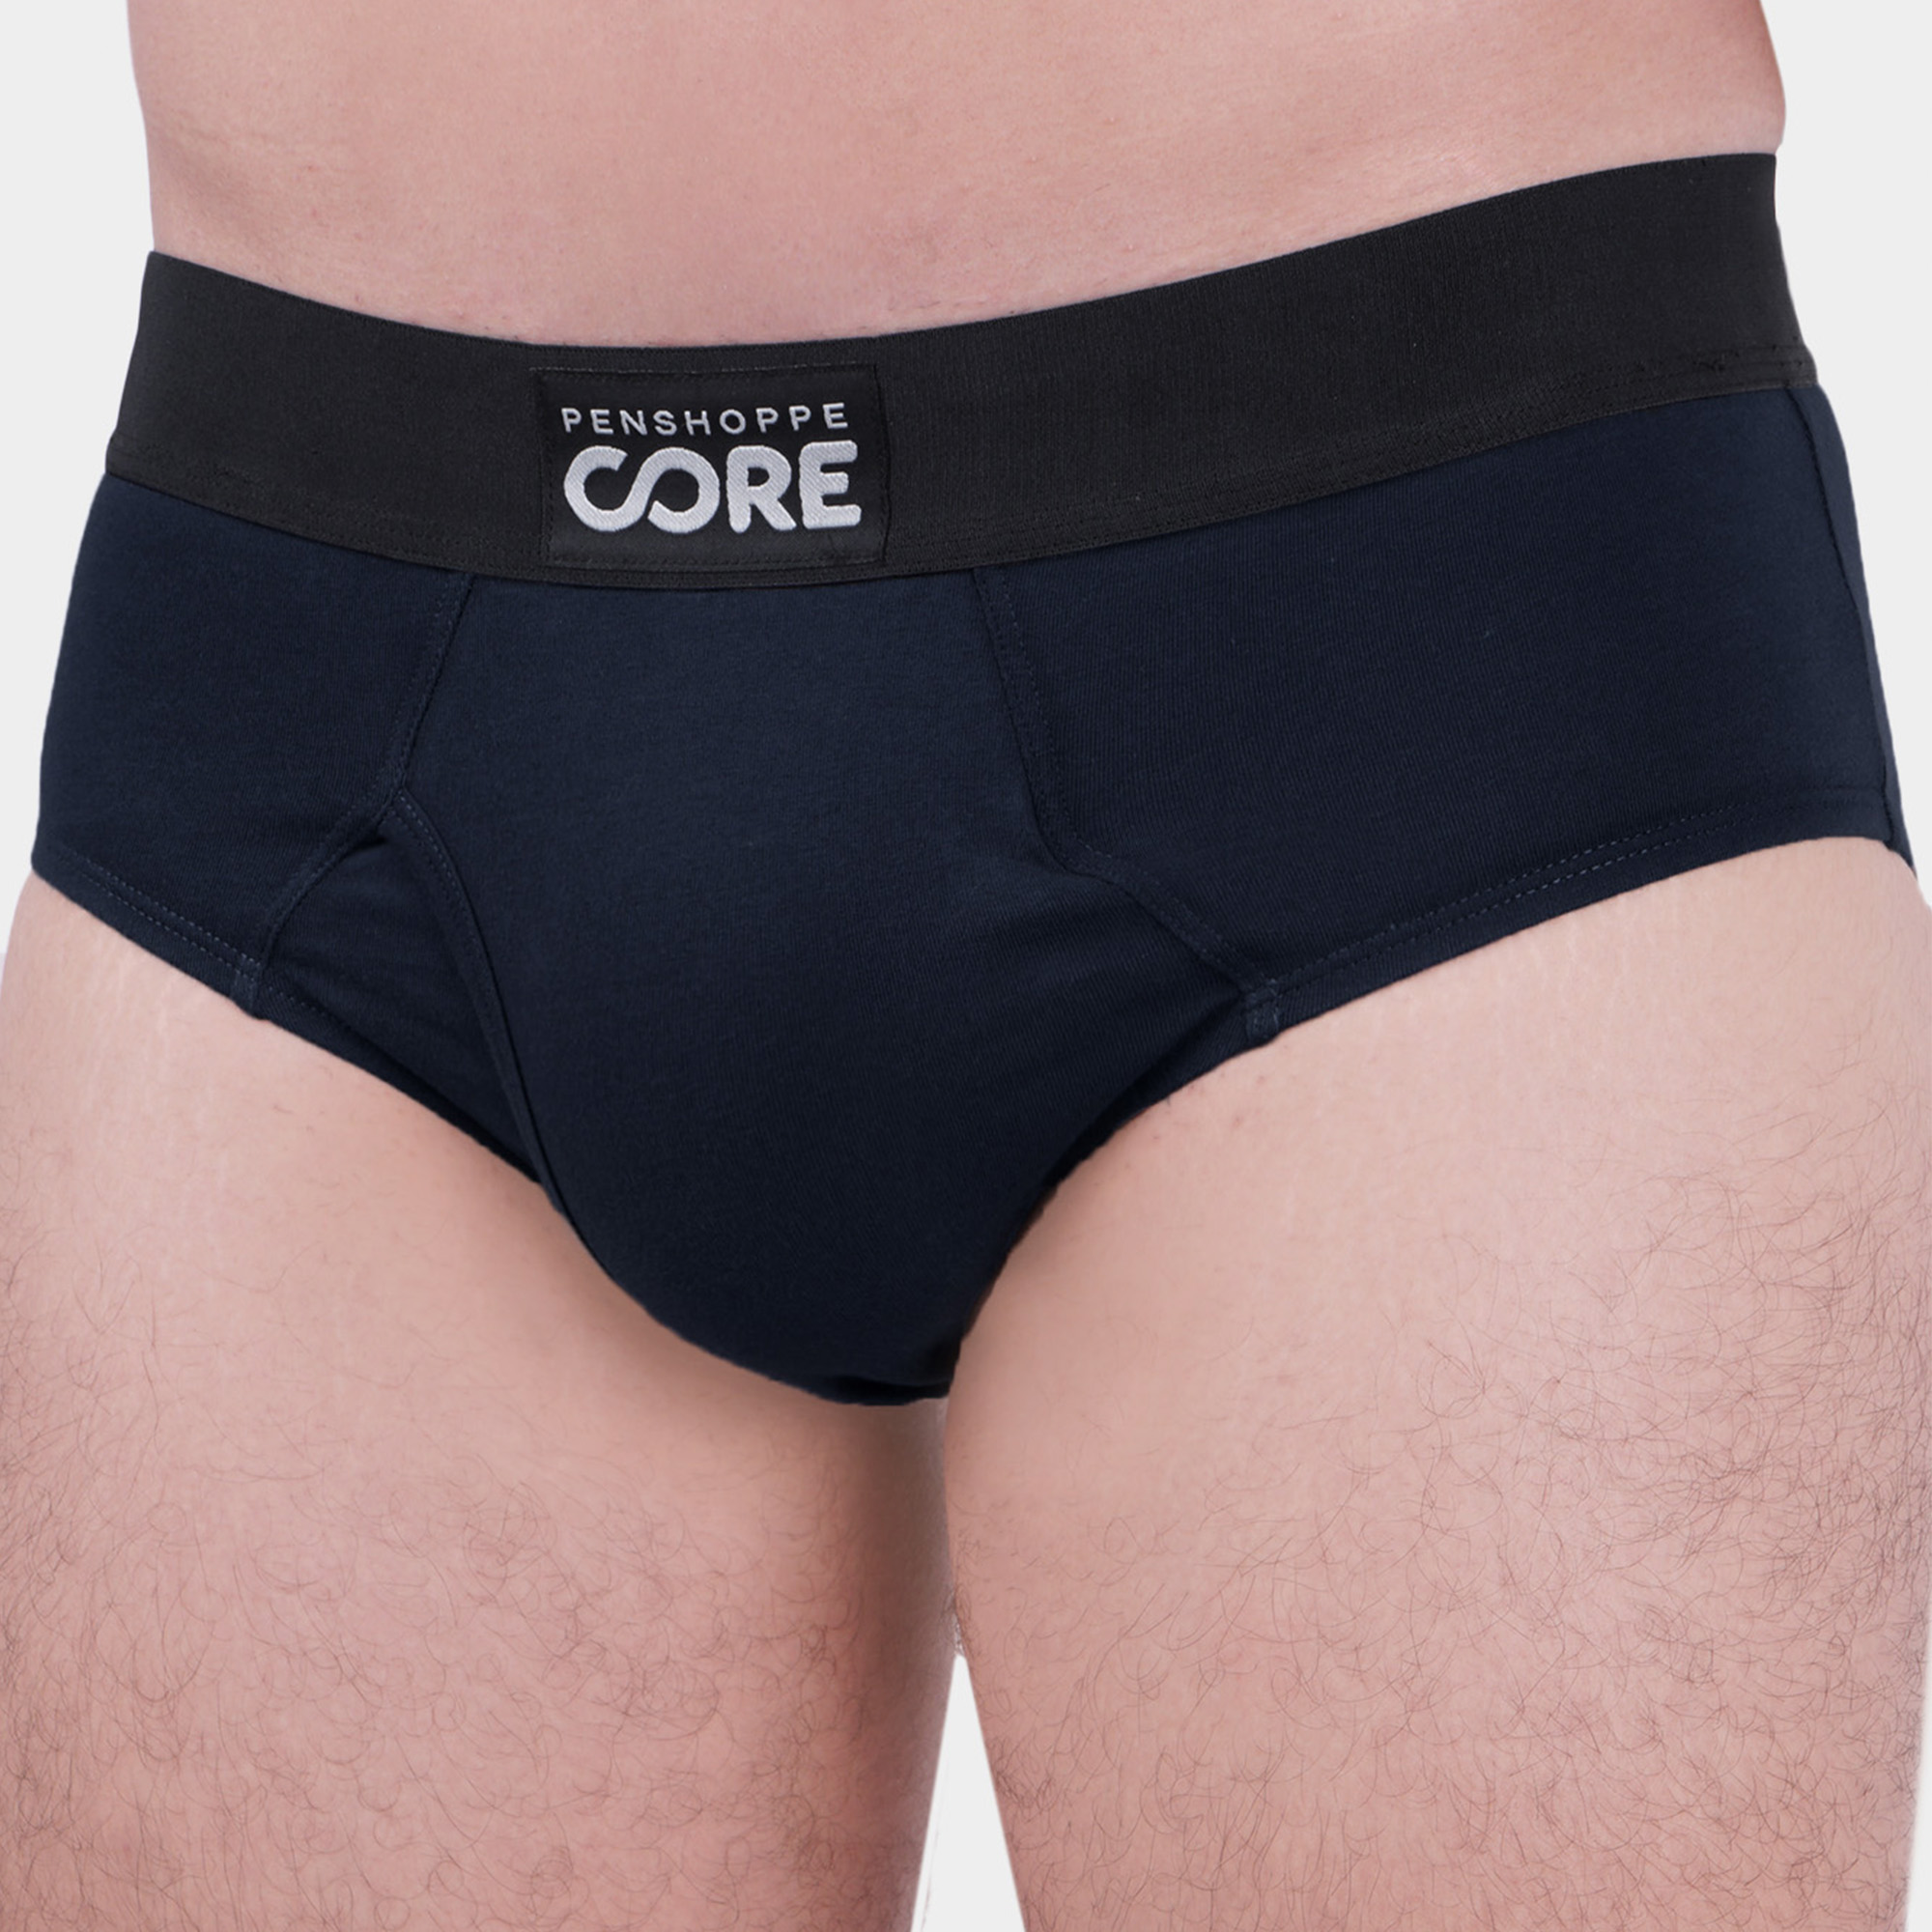 Penshoppe Core 3 in 1 Bundle Classic Briefs Underwear For Men